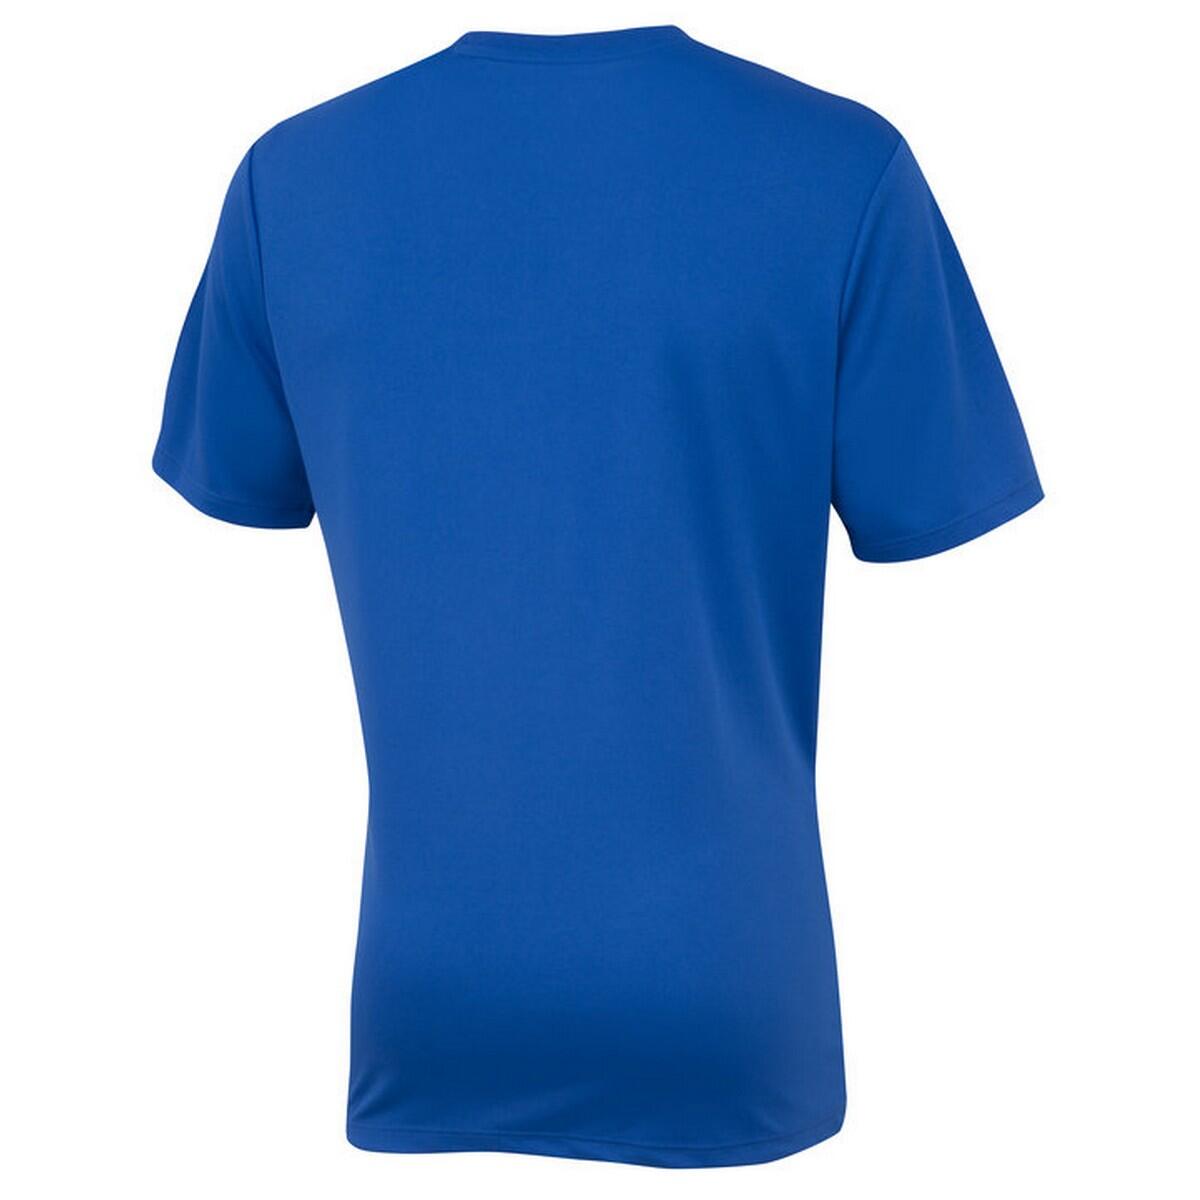 Mens Club ShortSleeved Jersey (Royal Blue) 2/3